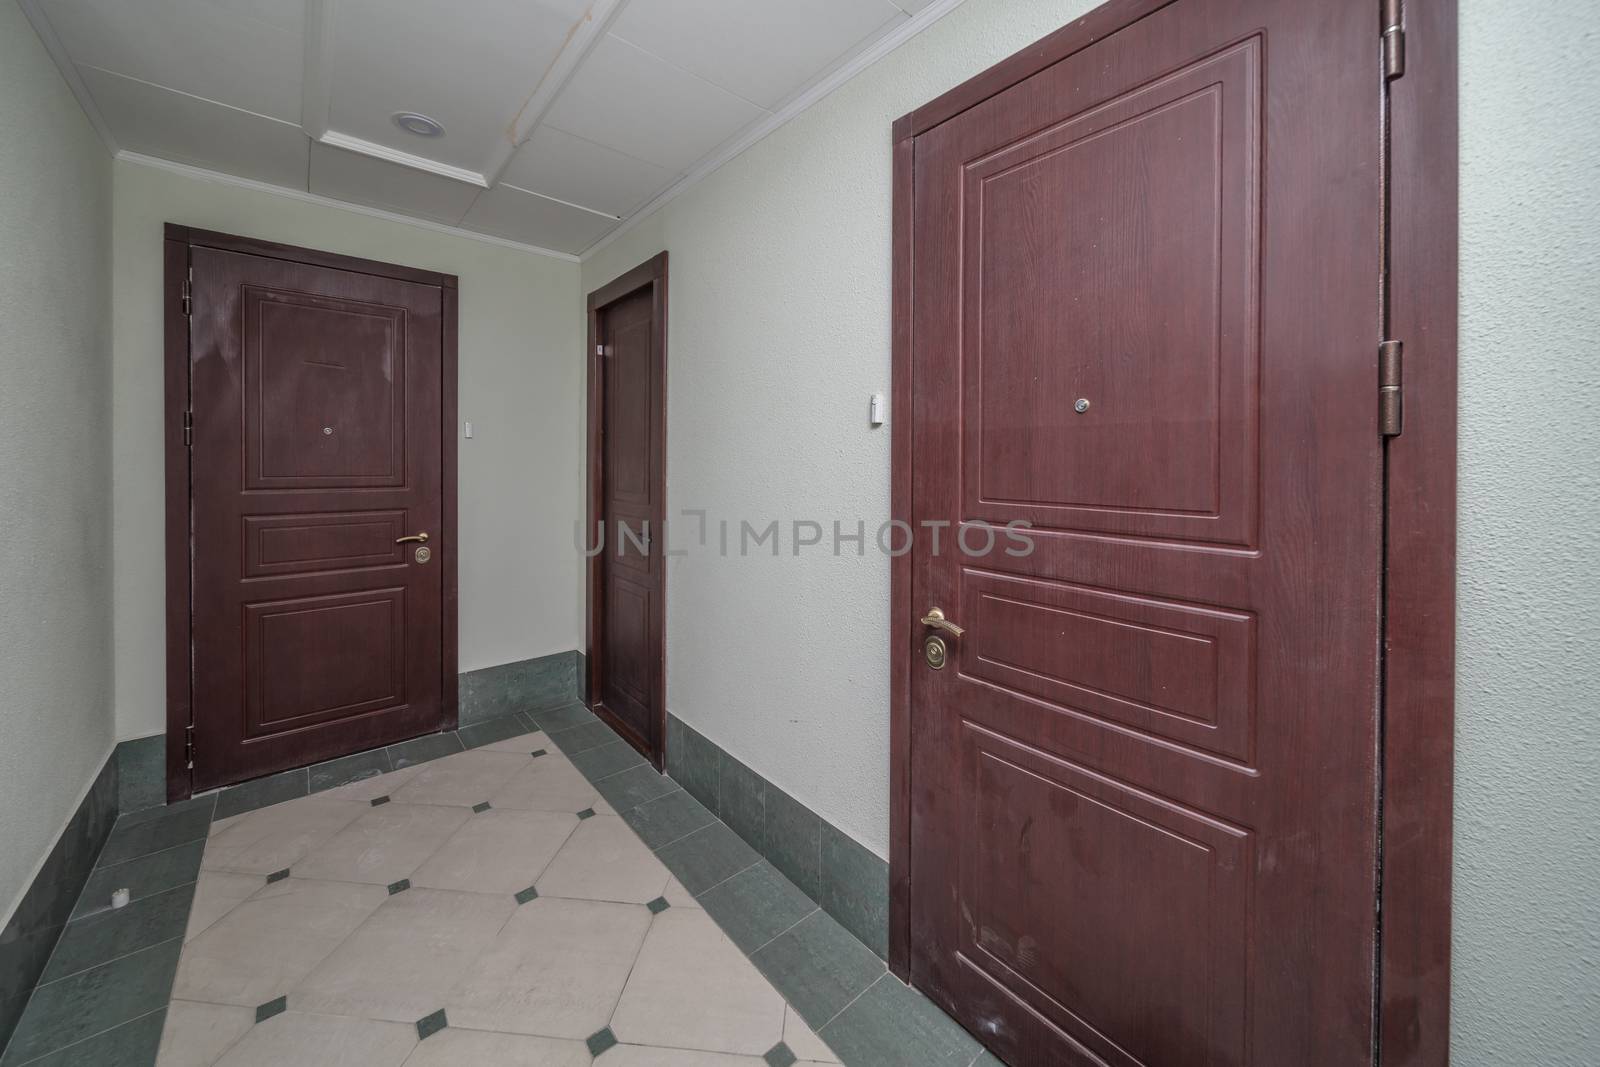  apartment doors entrance by olga_sweet